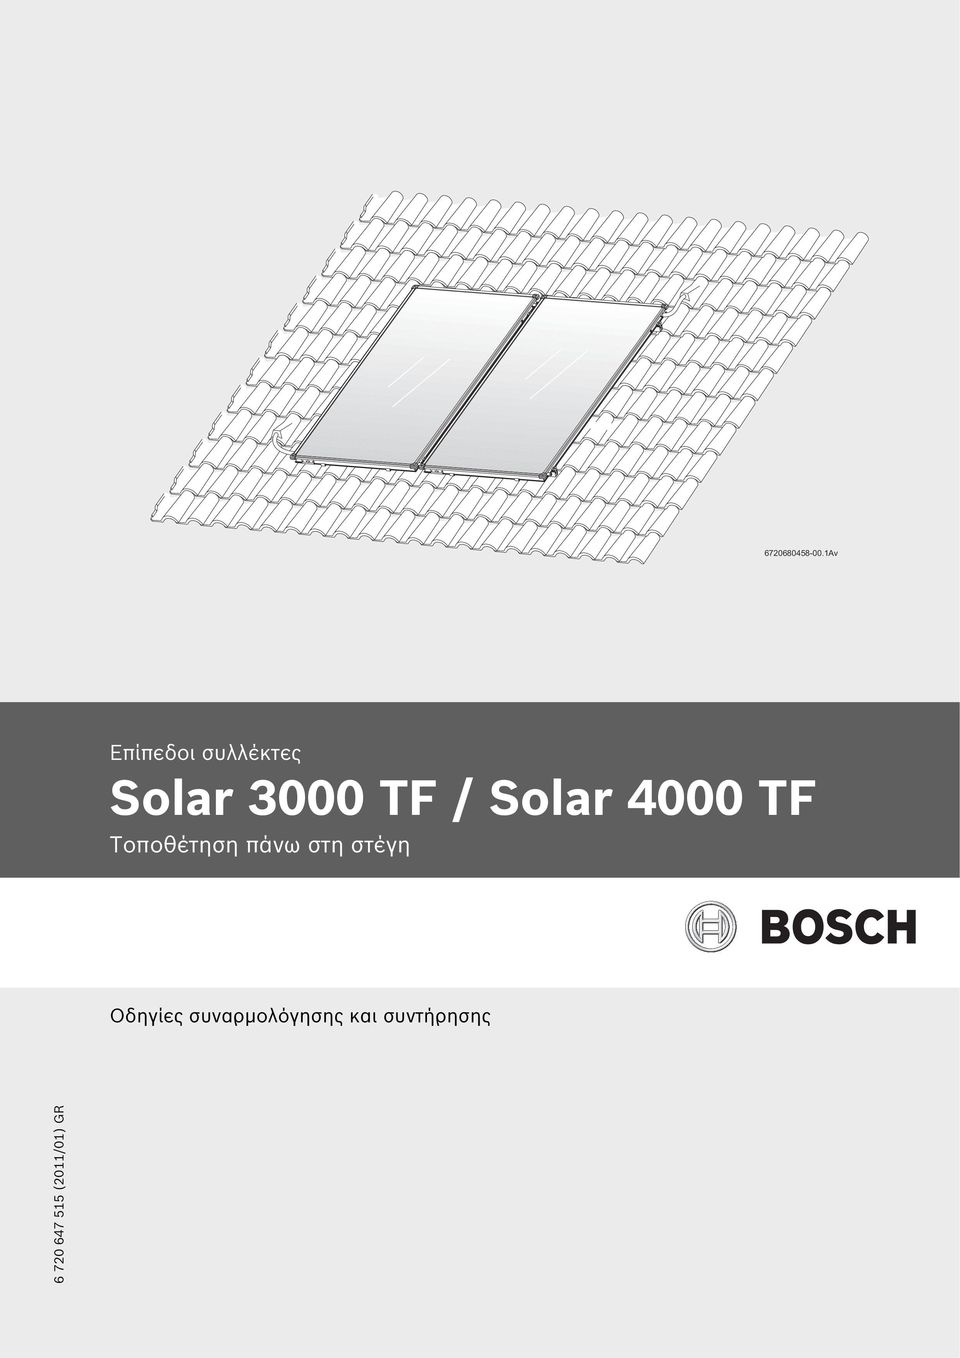 TF / Solar 4000 TF Τοποθέτηση